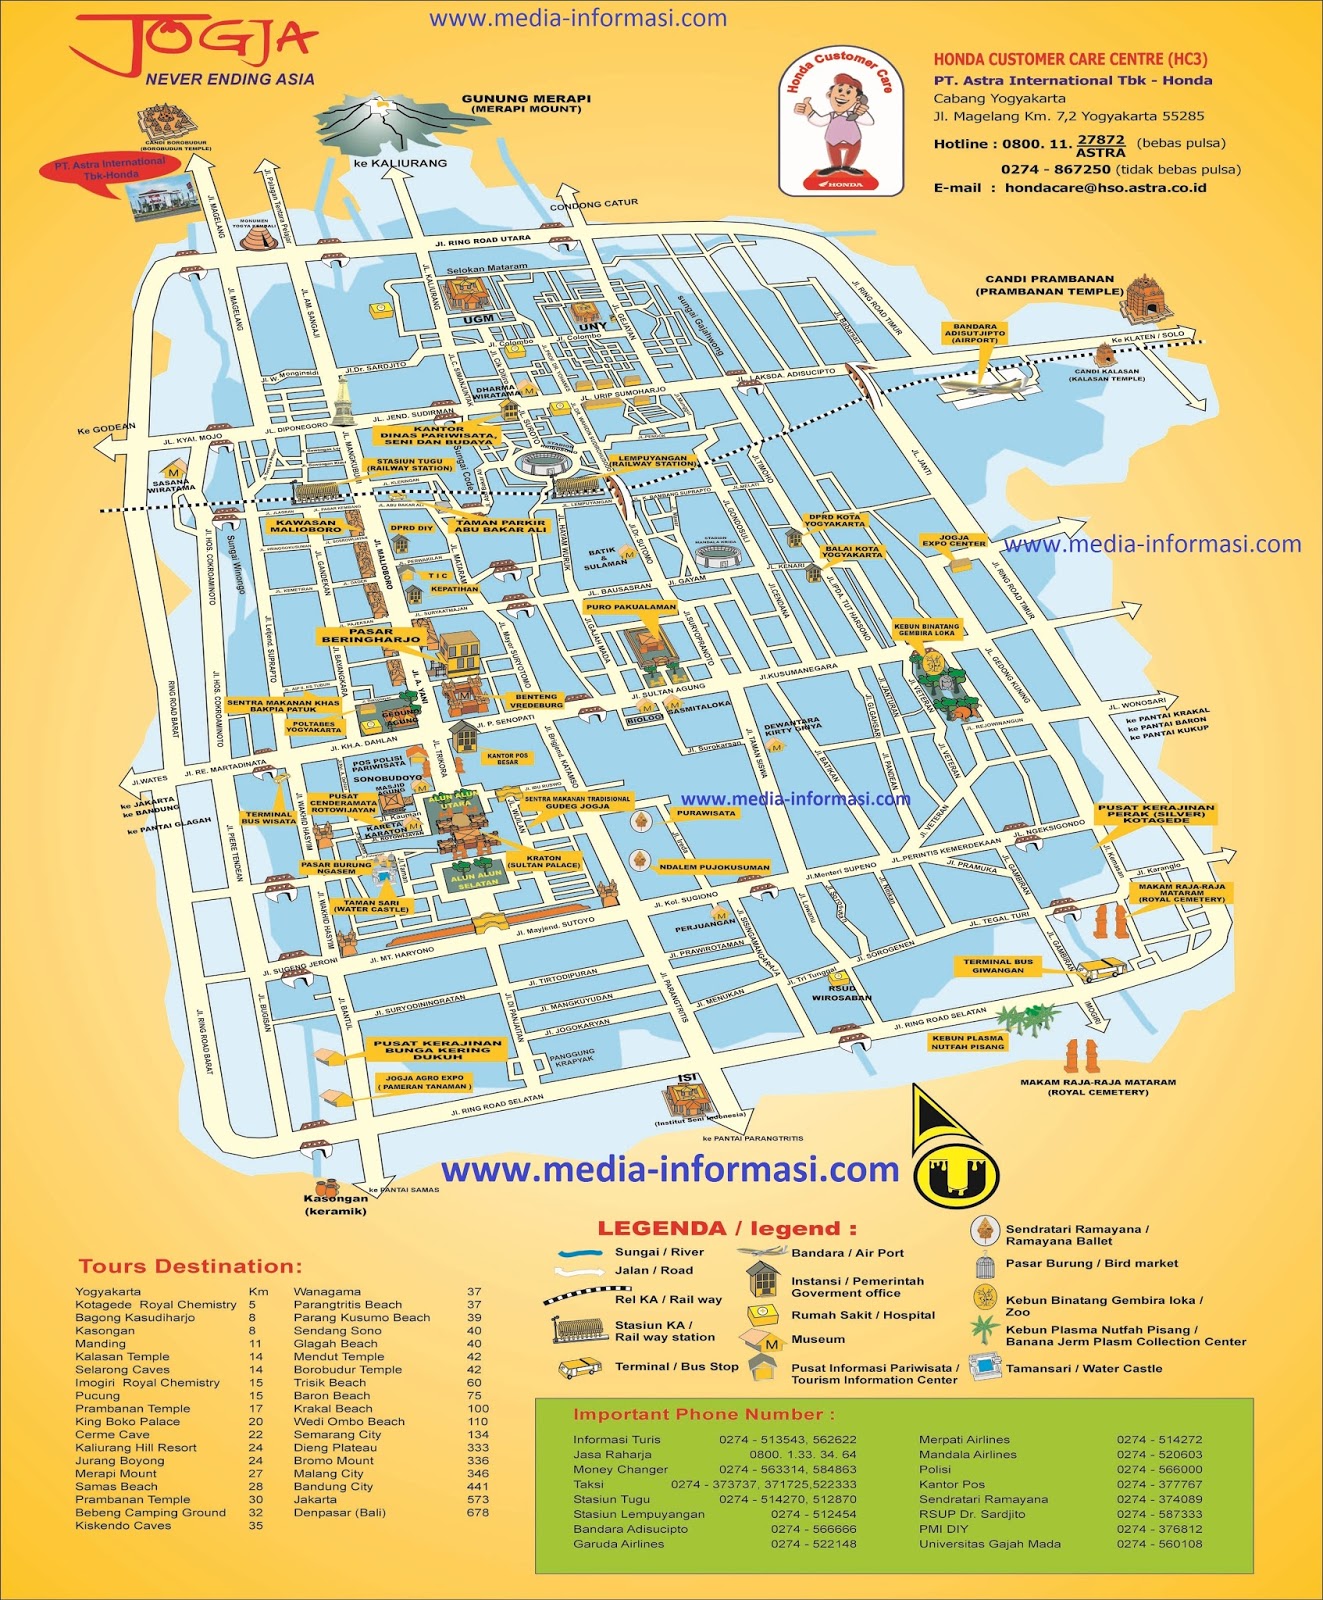 Peta Wisata Yogyakarta Lengkap Peta Wisata Indonesia dan